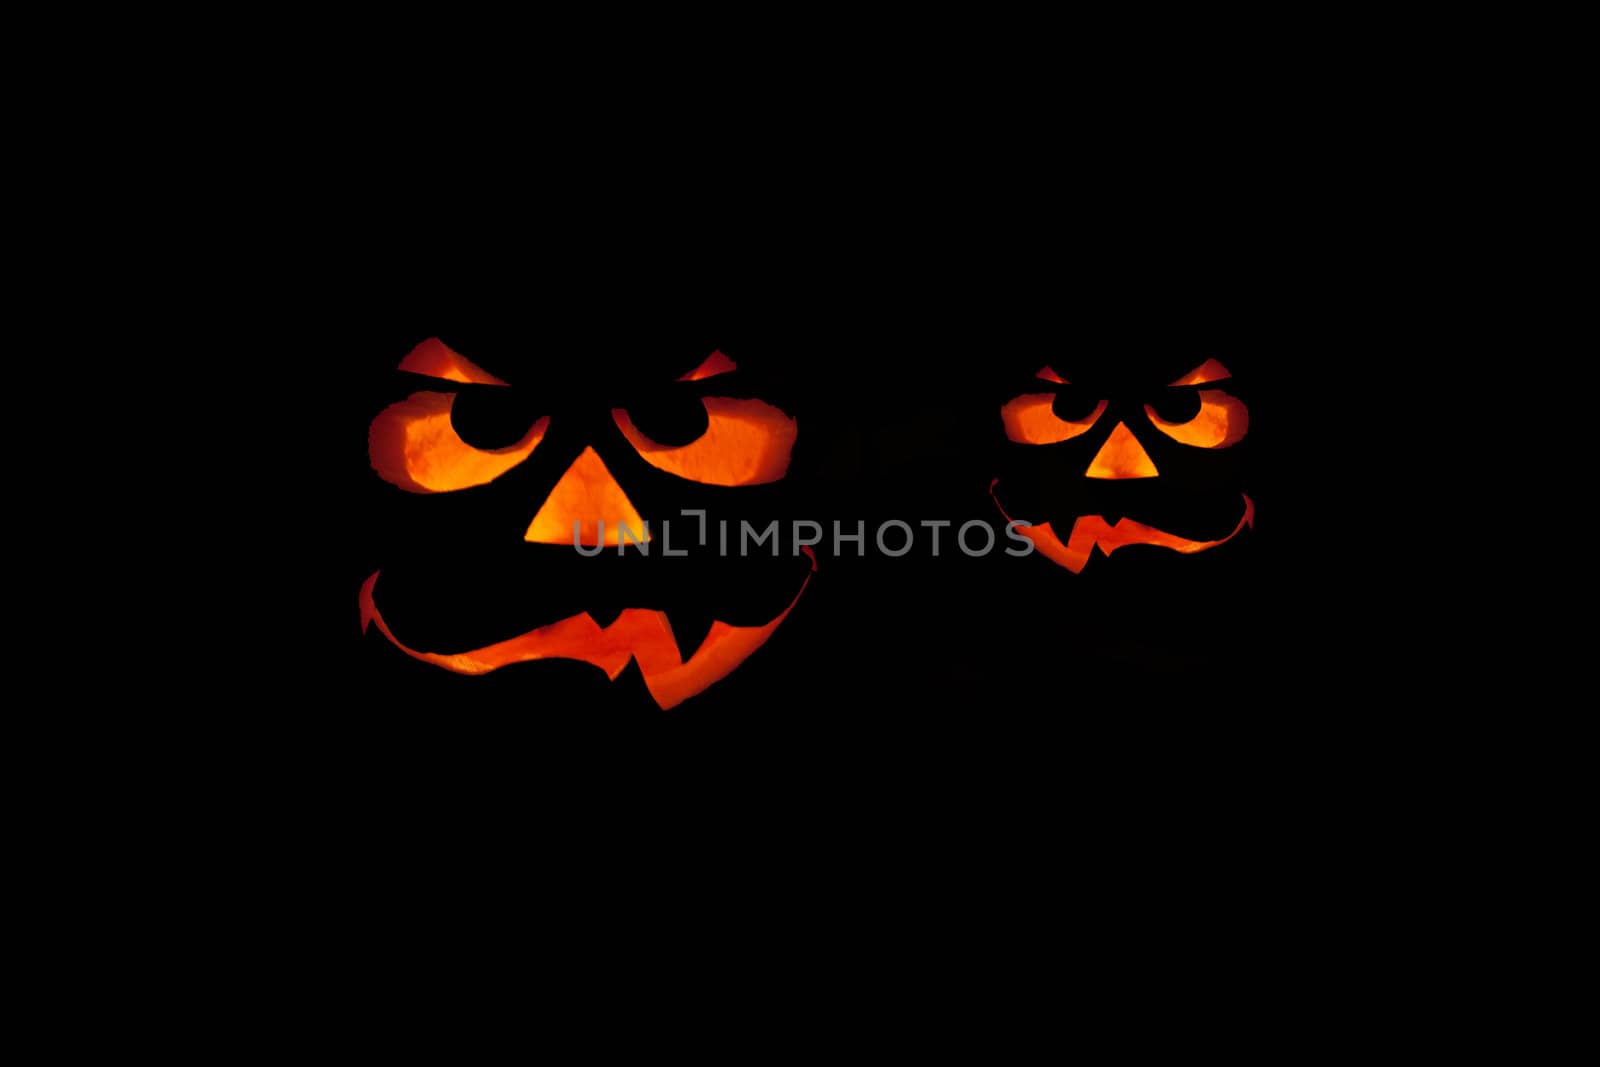 Halloween Pumpkin by sk11303